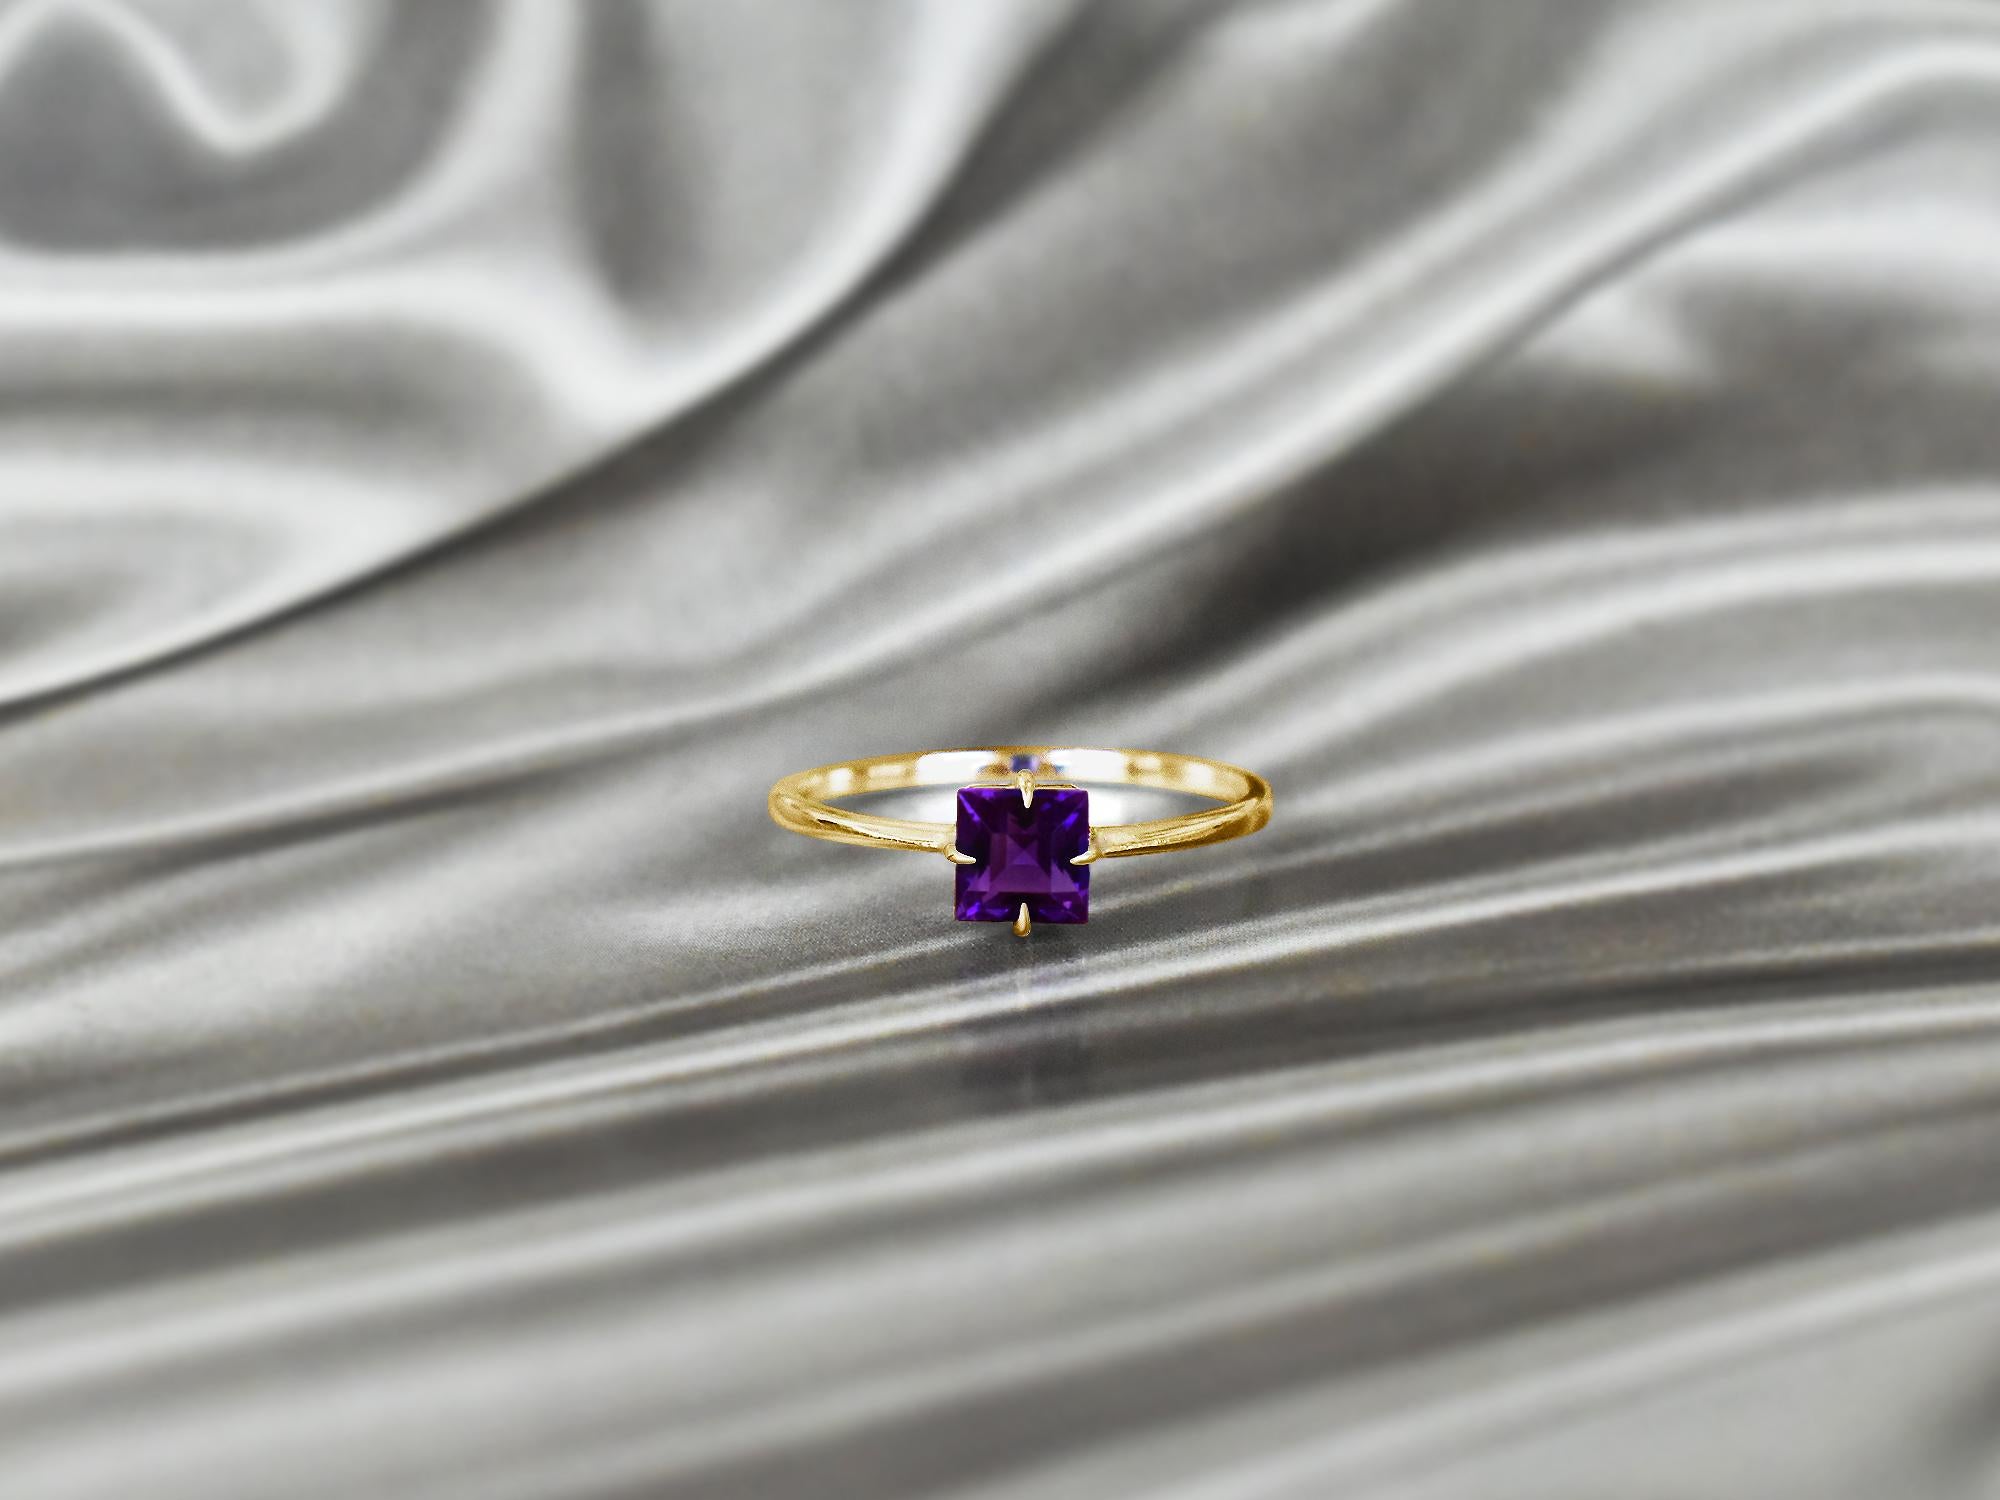 For Sale:  10k Gold Princess Cut 5x5 mm Princess Cut Gemstone Ring Gemstone Engagement Ring 3